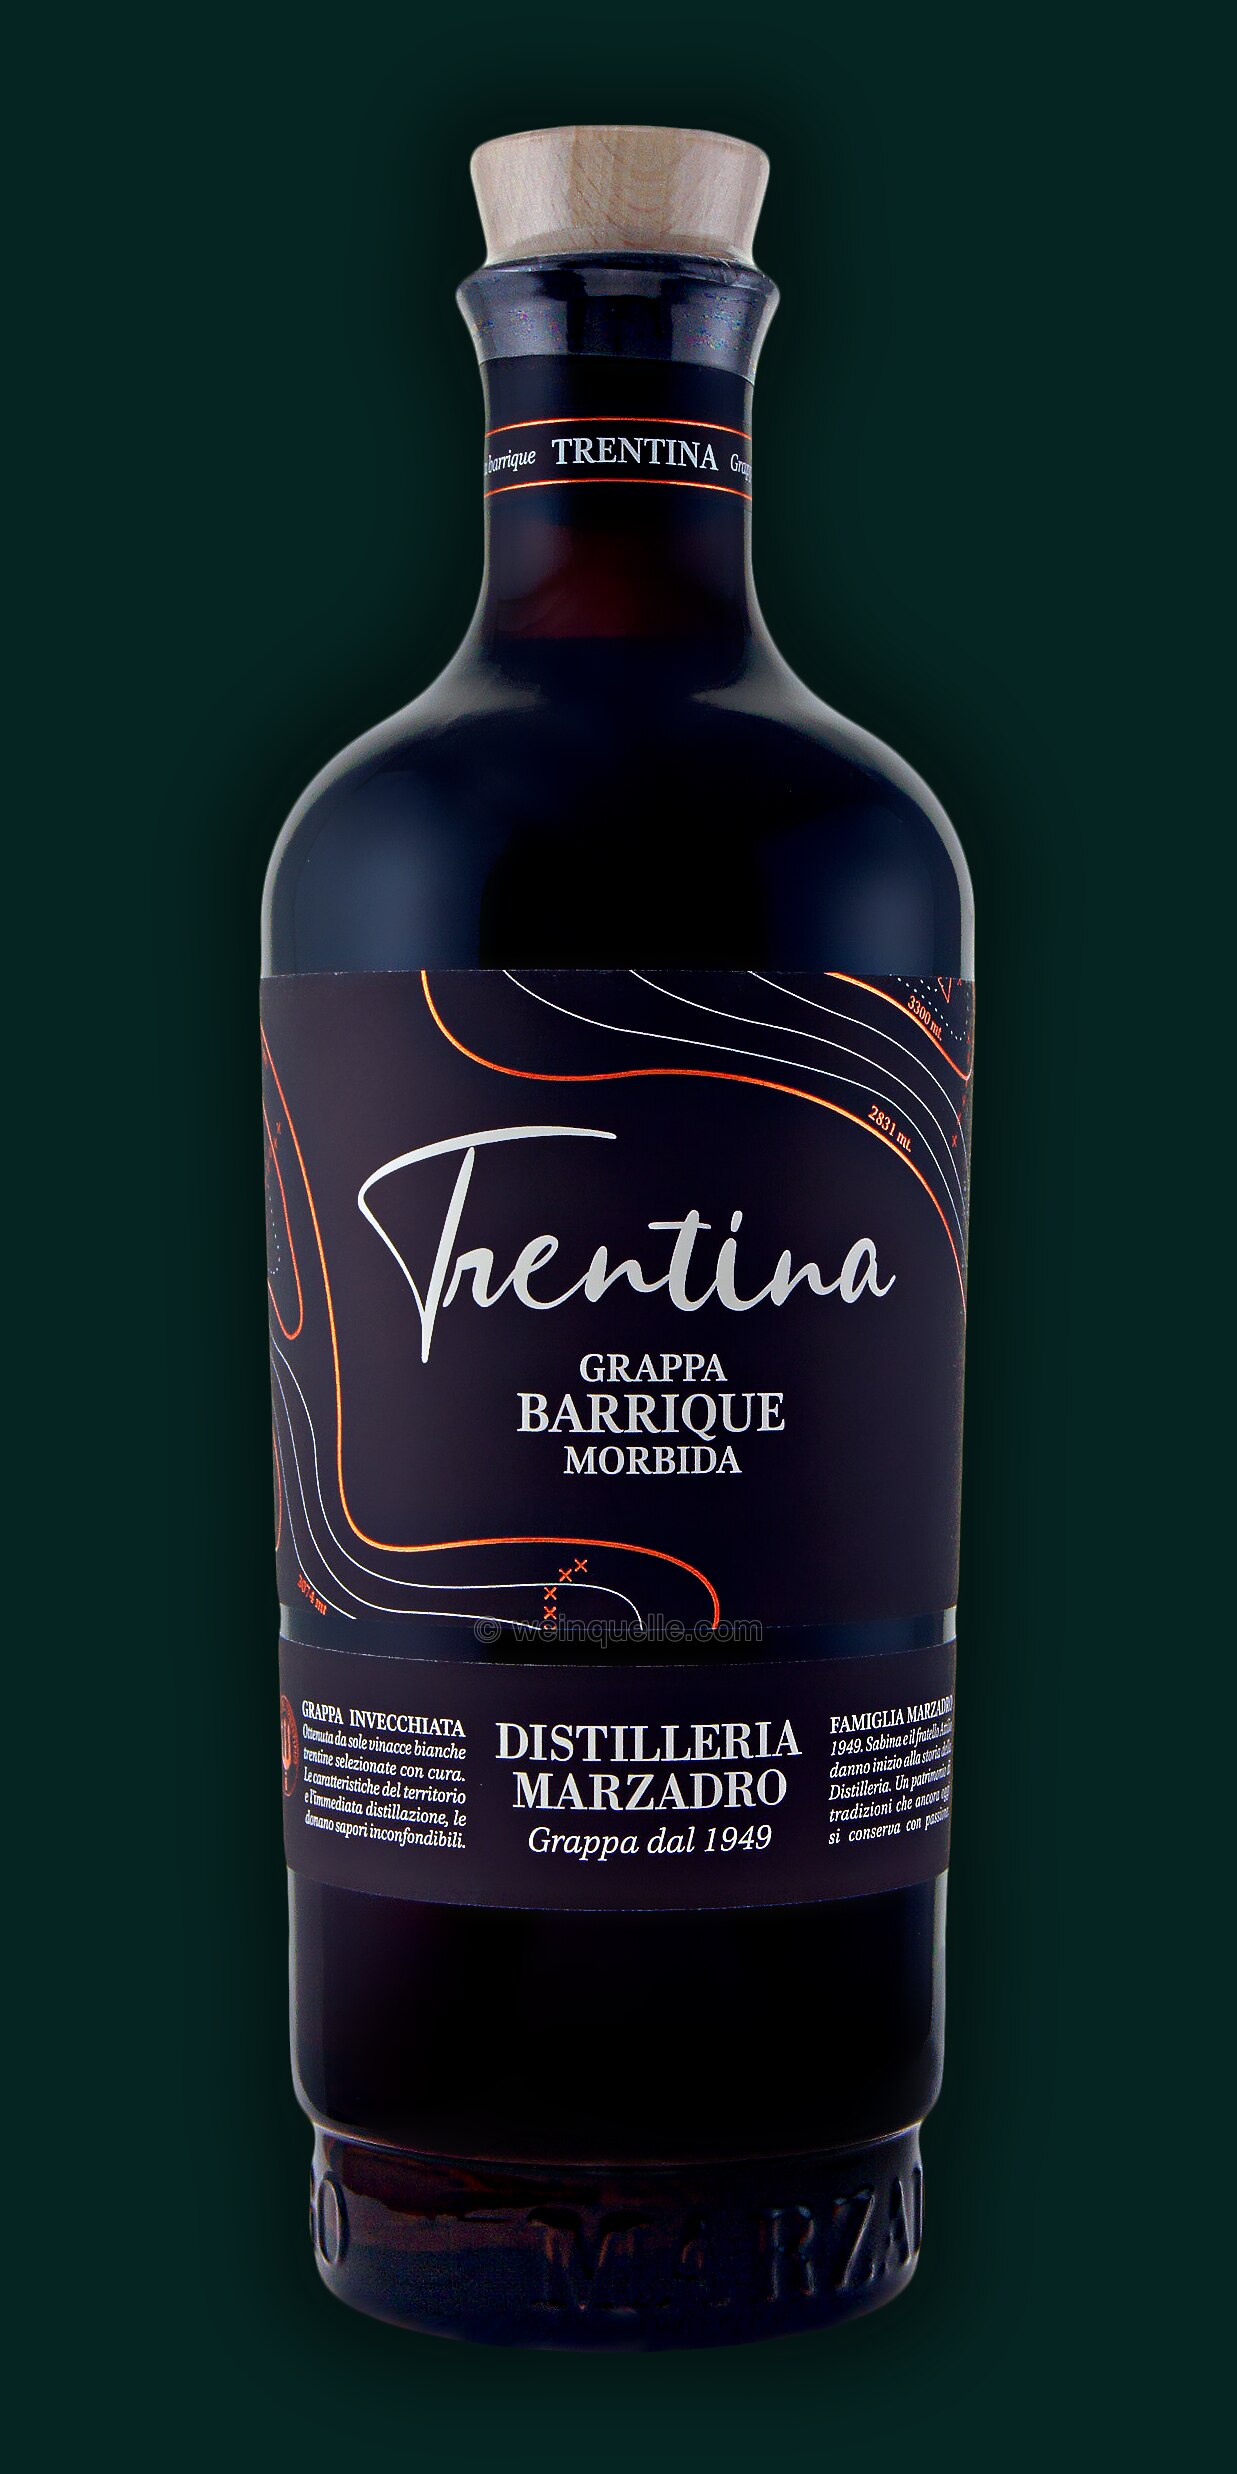 Marzadro Grappa Morbida Weinquelle - Lühmann Liter, Trentina Barrique 24,90 € La 0,7